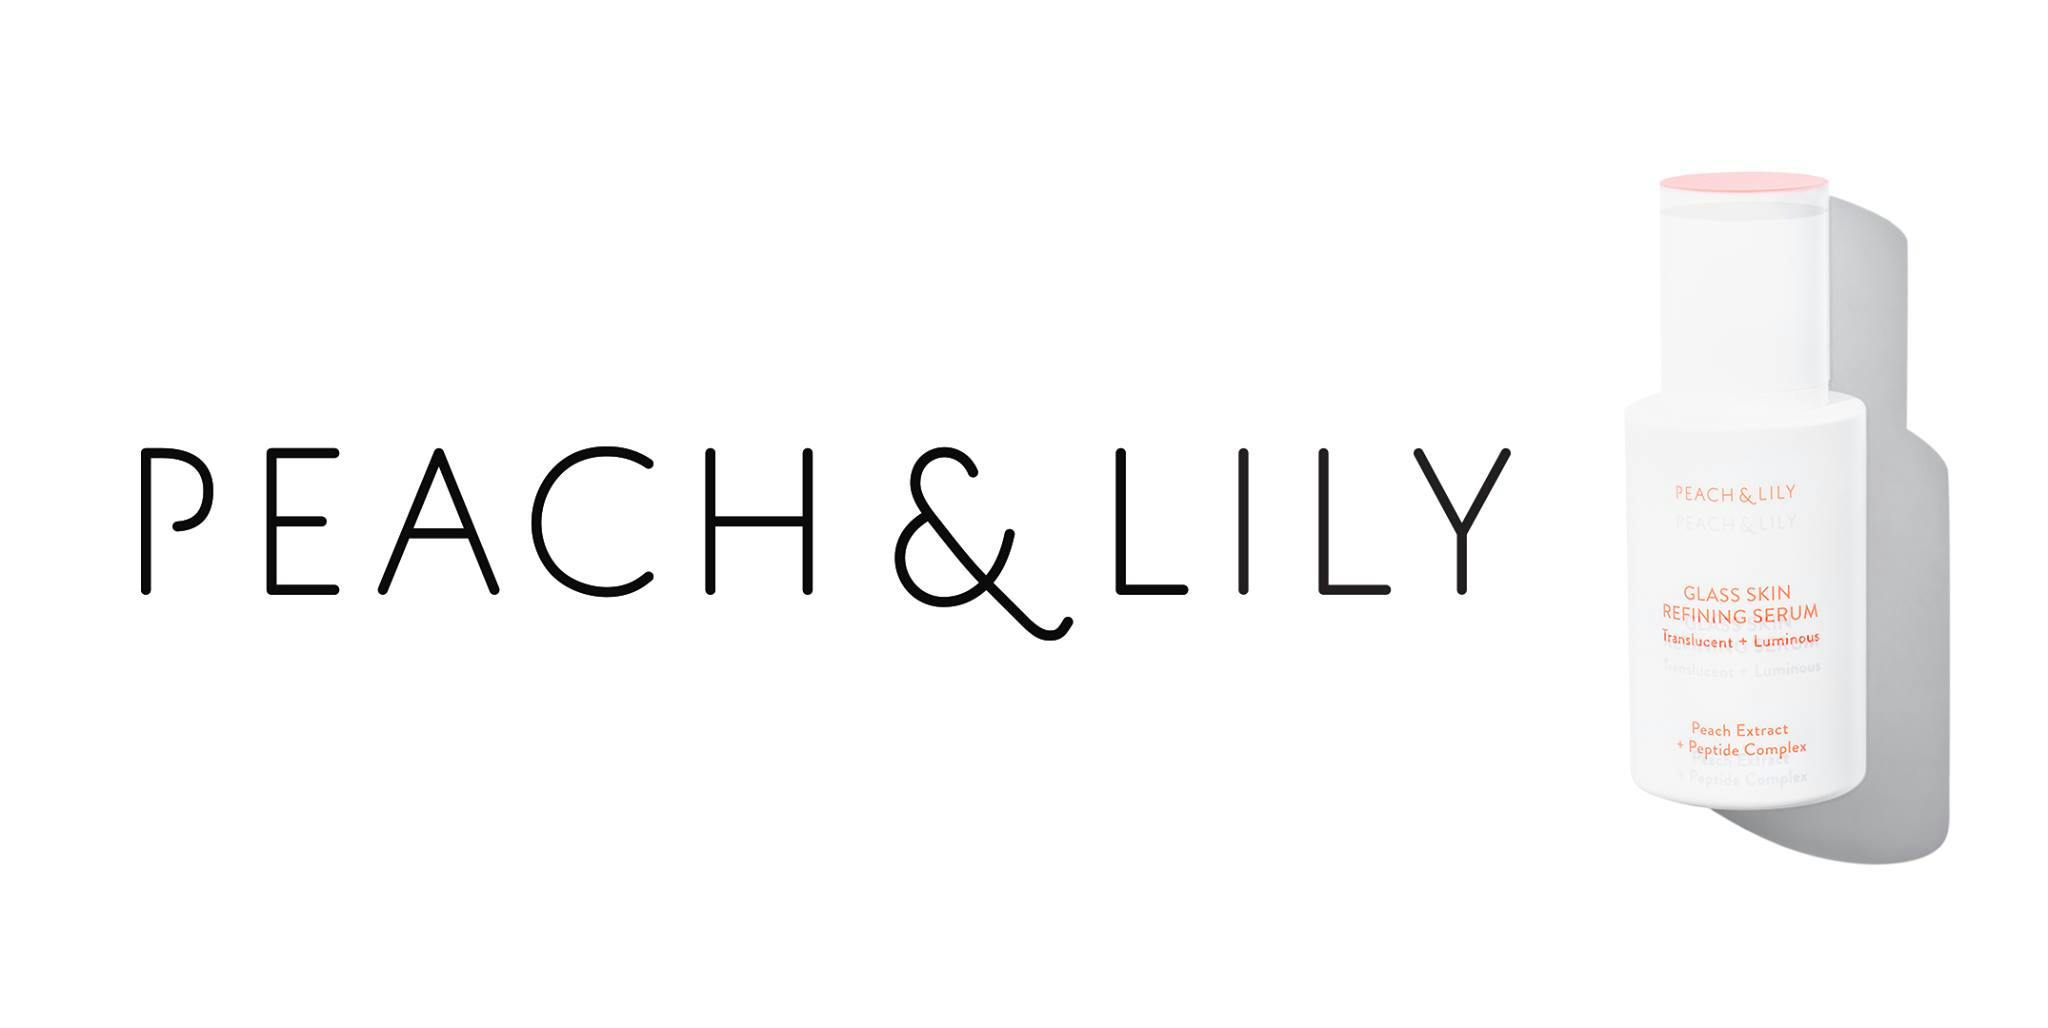 Peach & Lily cosmetics ad